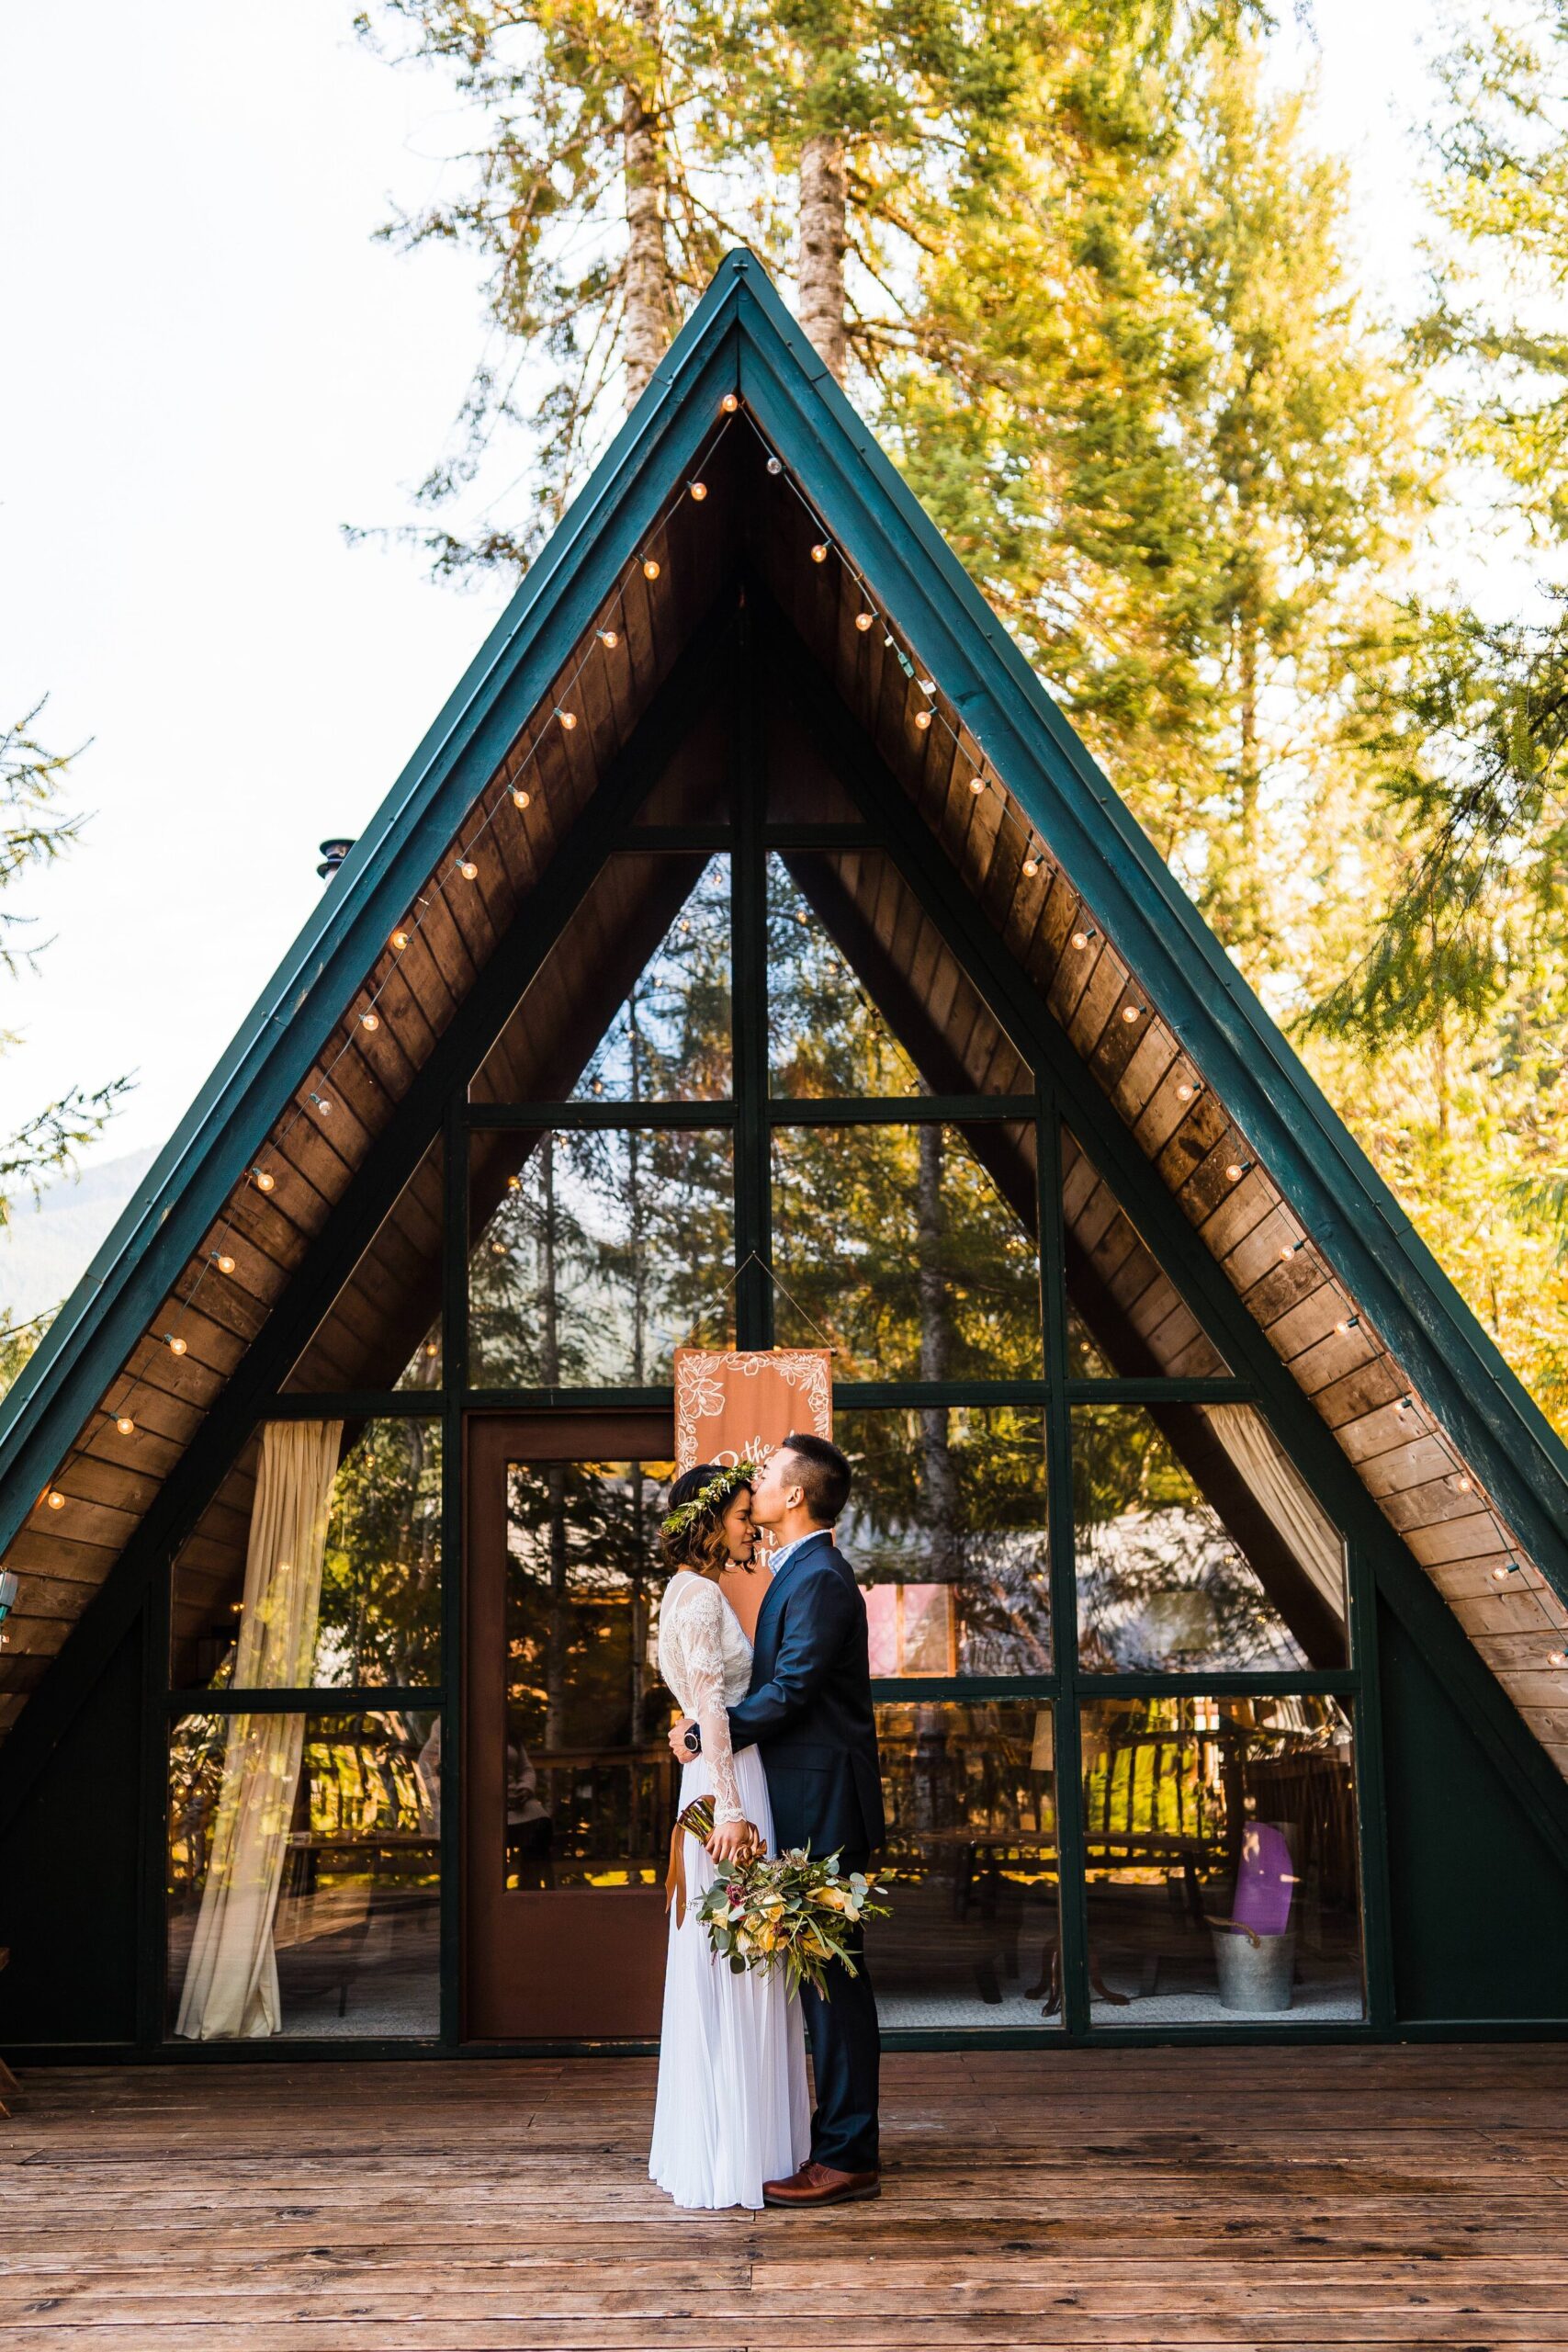 Intimate A-Frame Cabin Wedding at Mount Rainier